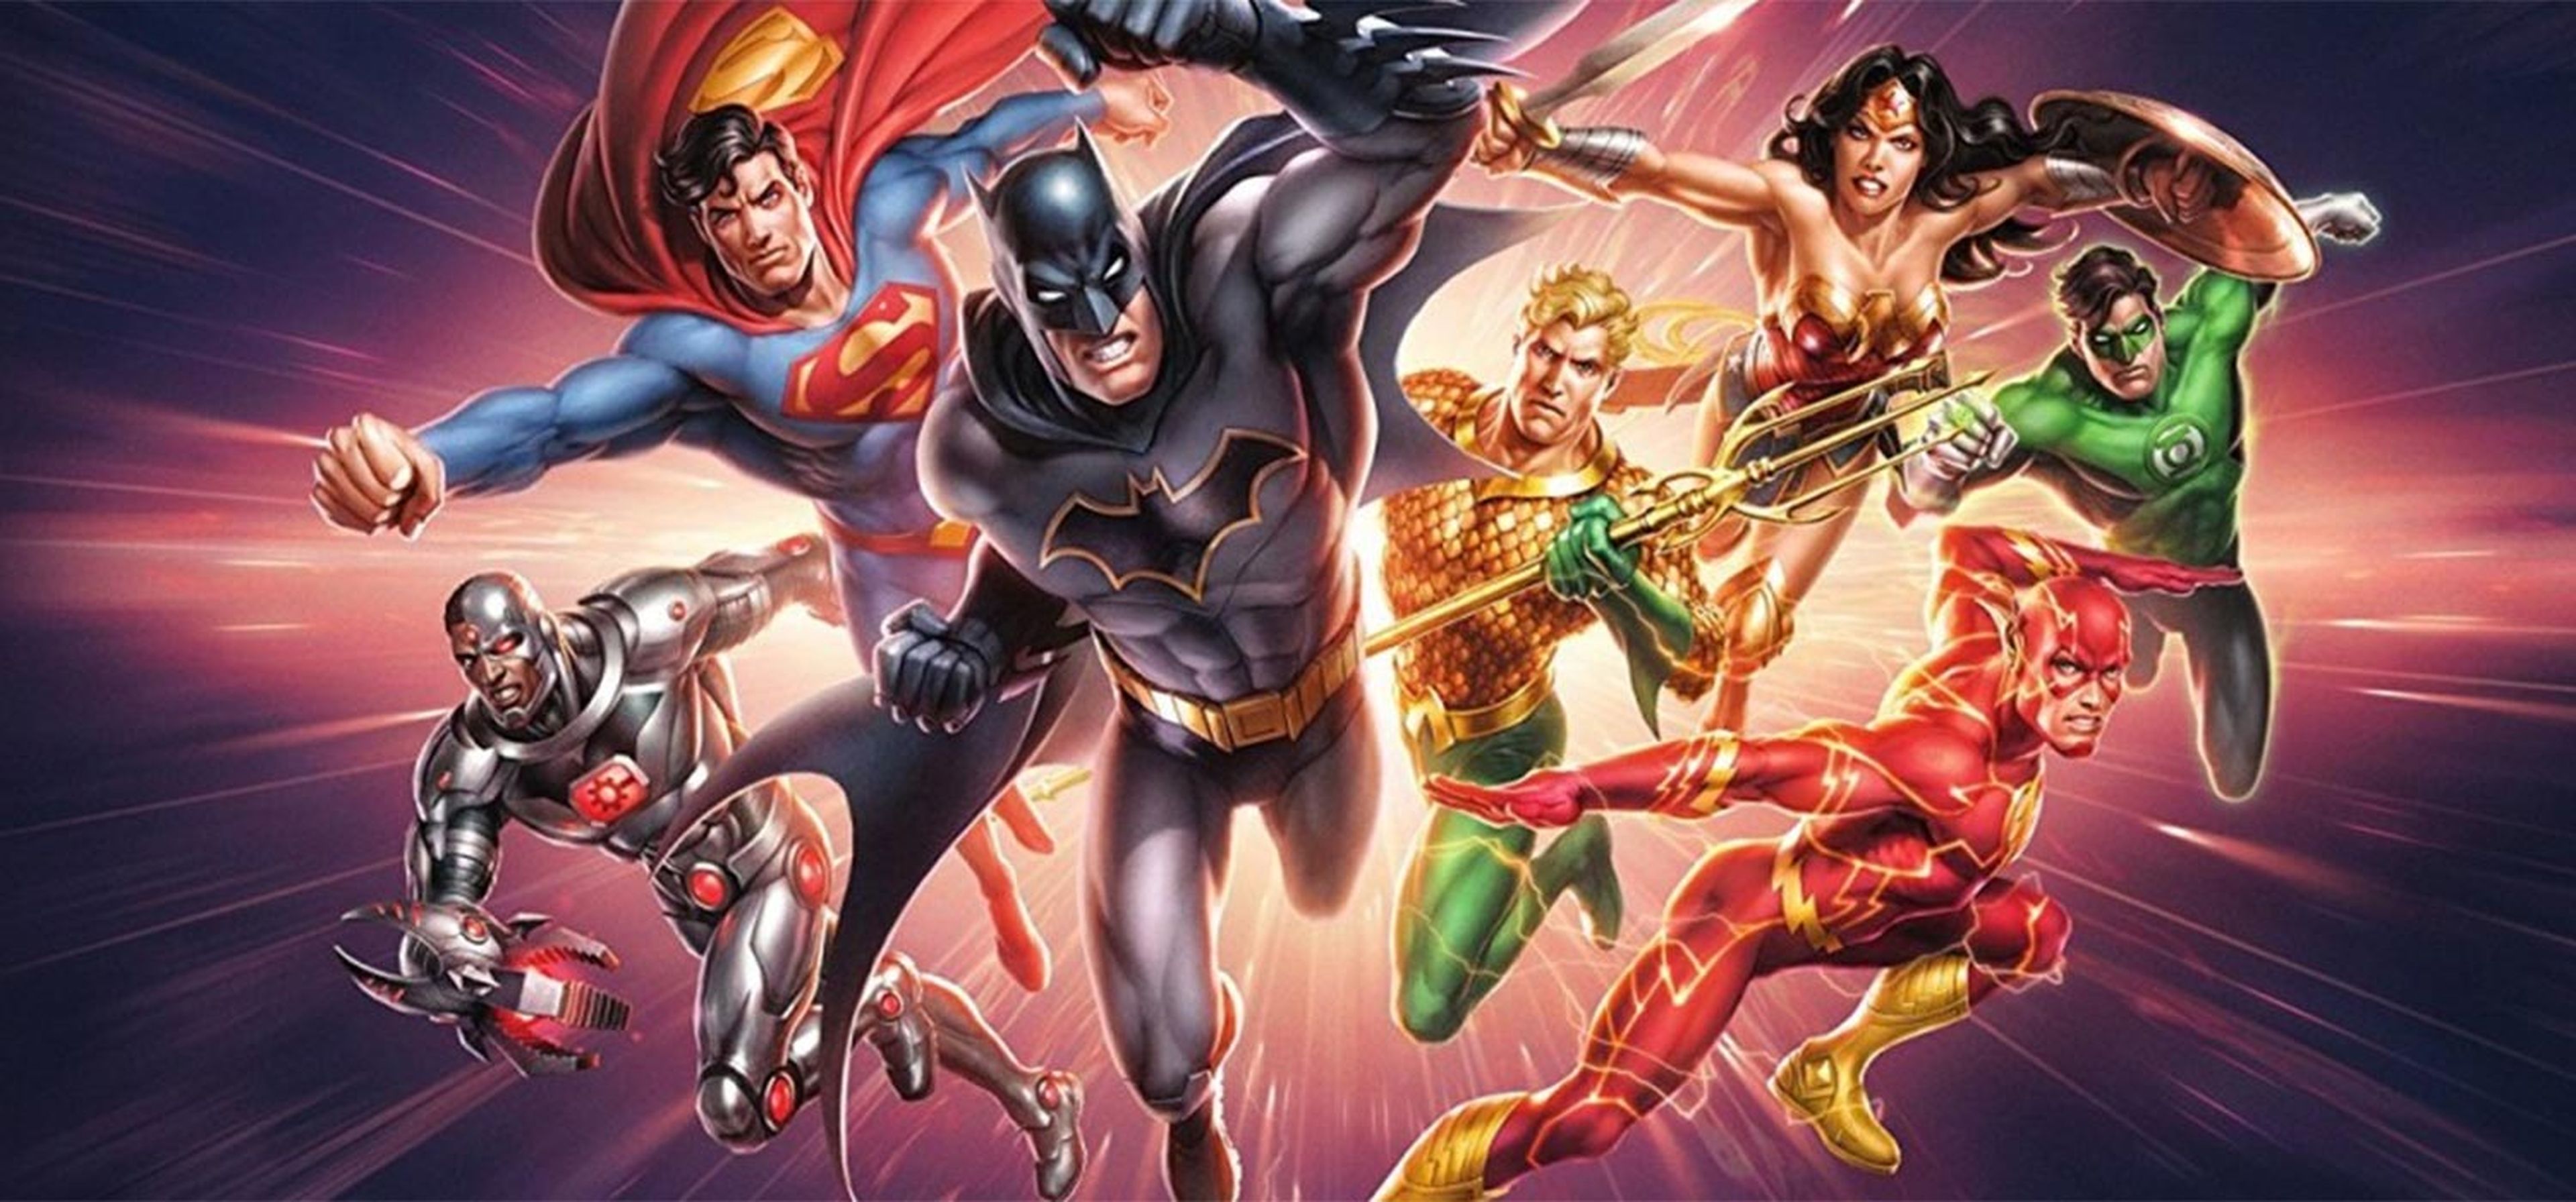 DC Universe Animated Original Movies: Todas las películas animadas de DC Comics